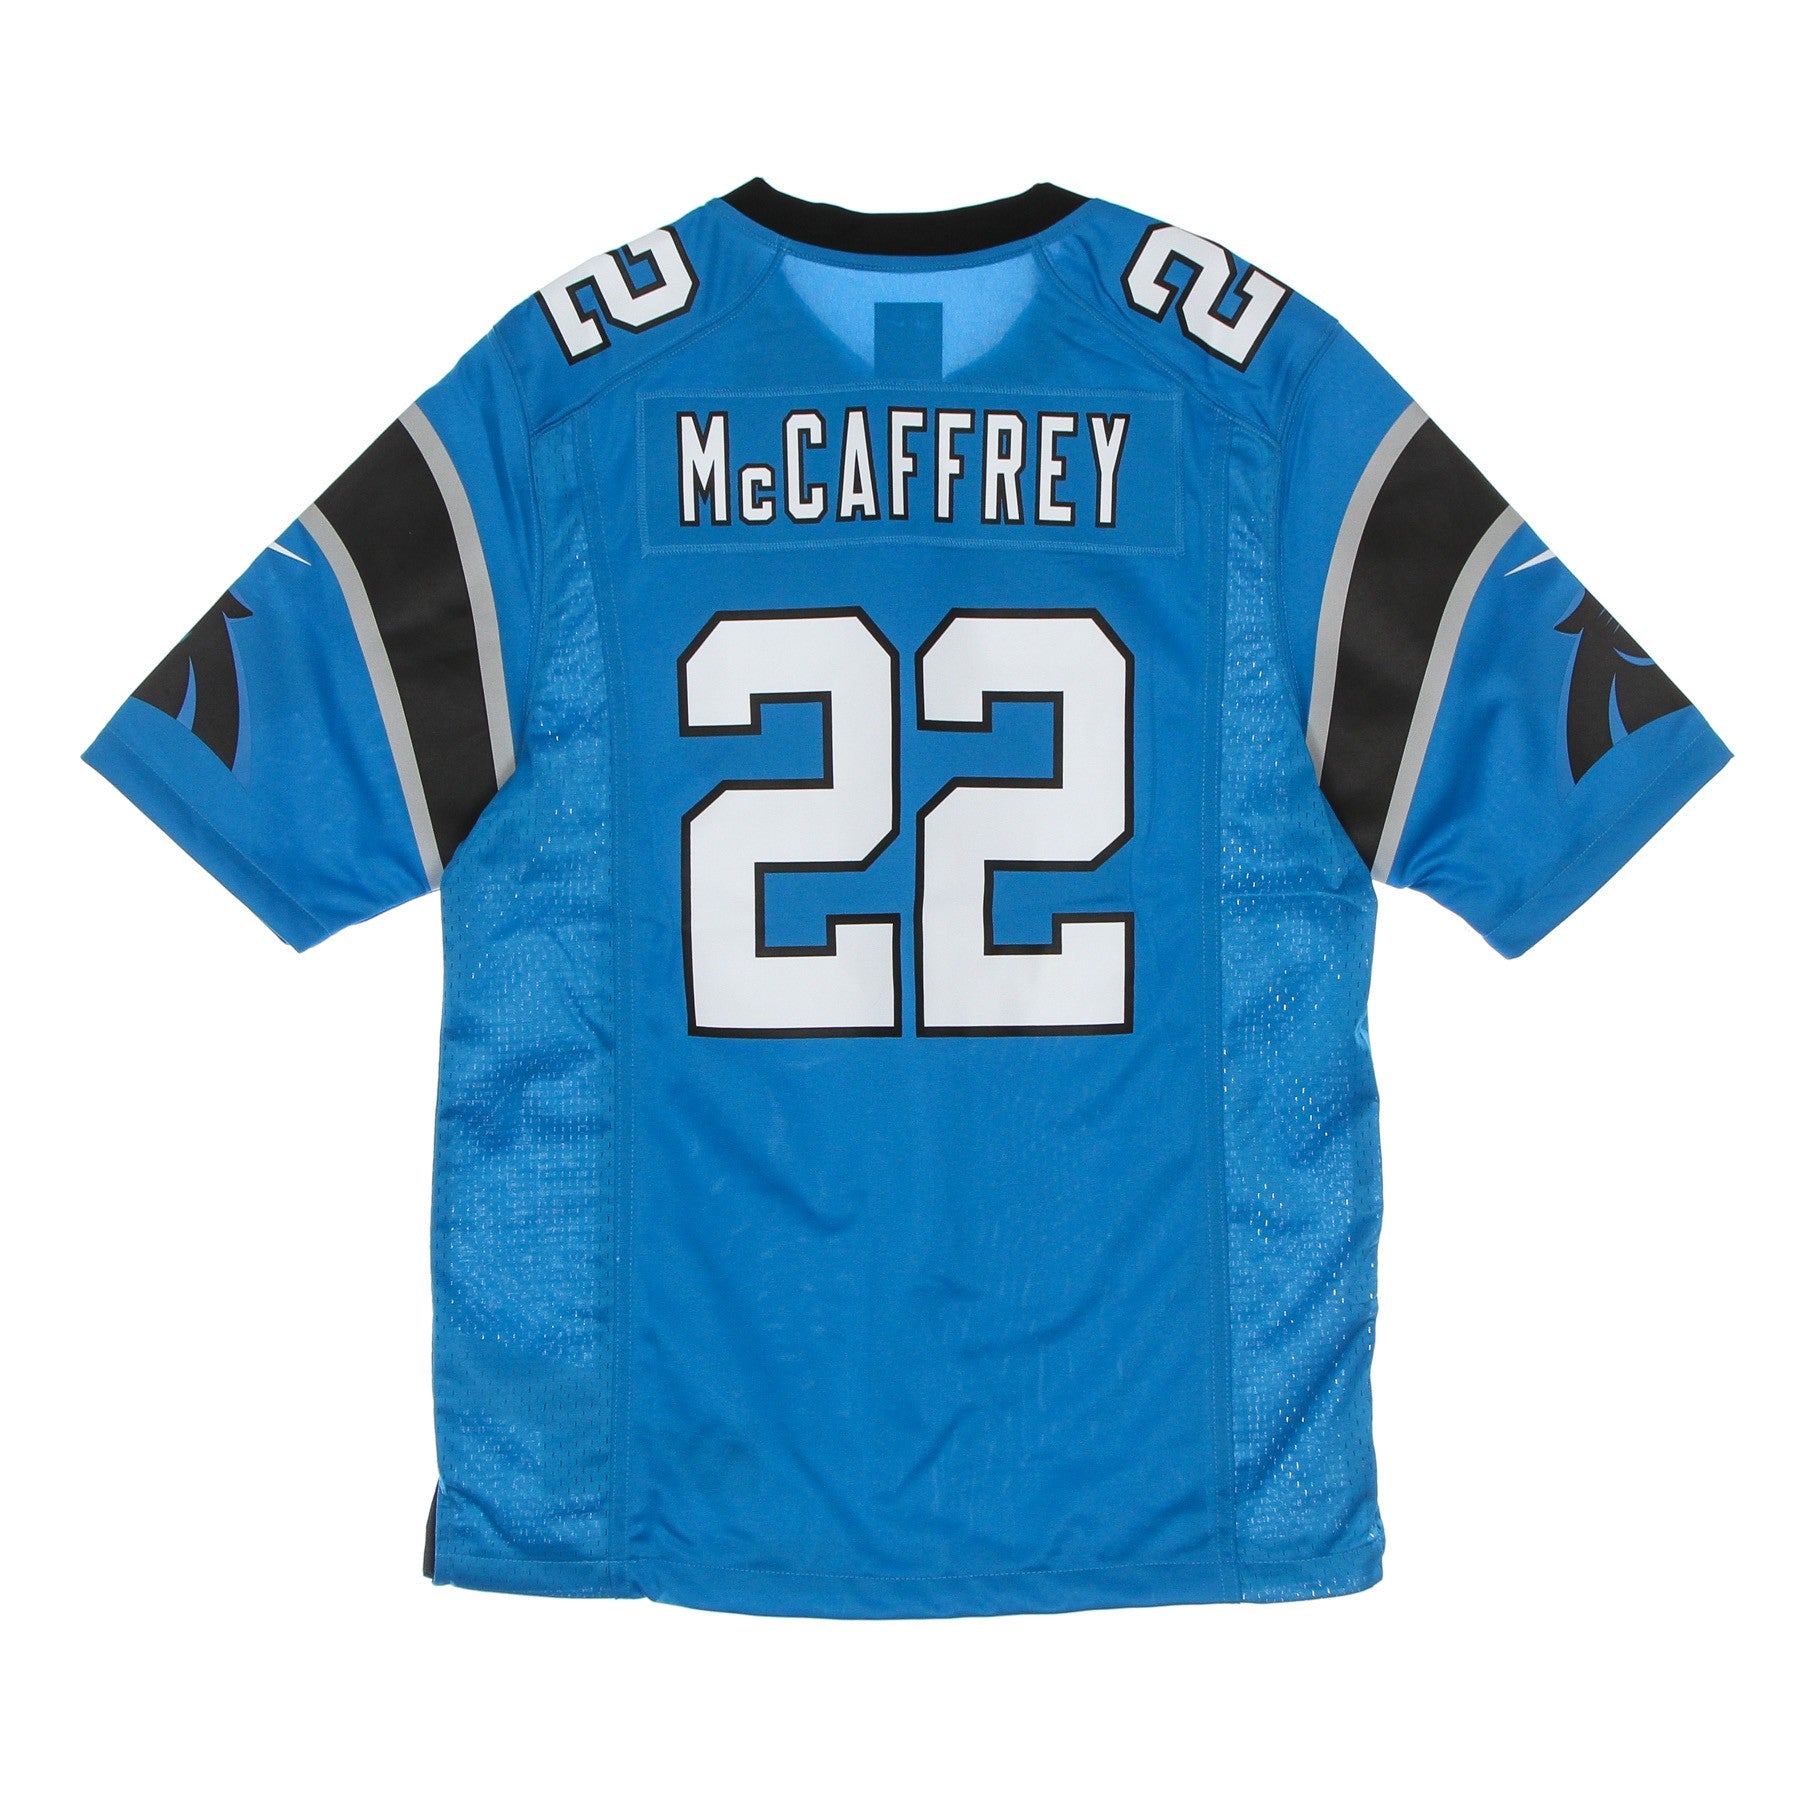 American Football Jacket Men's NFL Game Alternate Jersey No 22 Mc Caffrey Carpan Original Team Colors